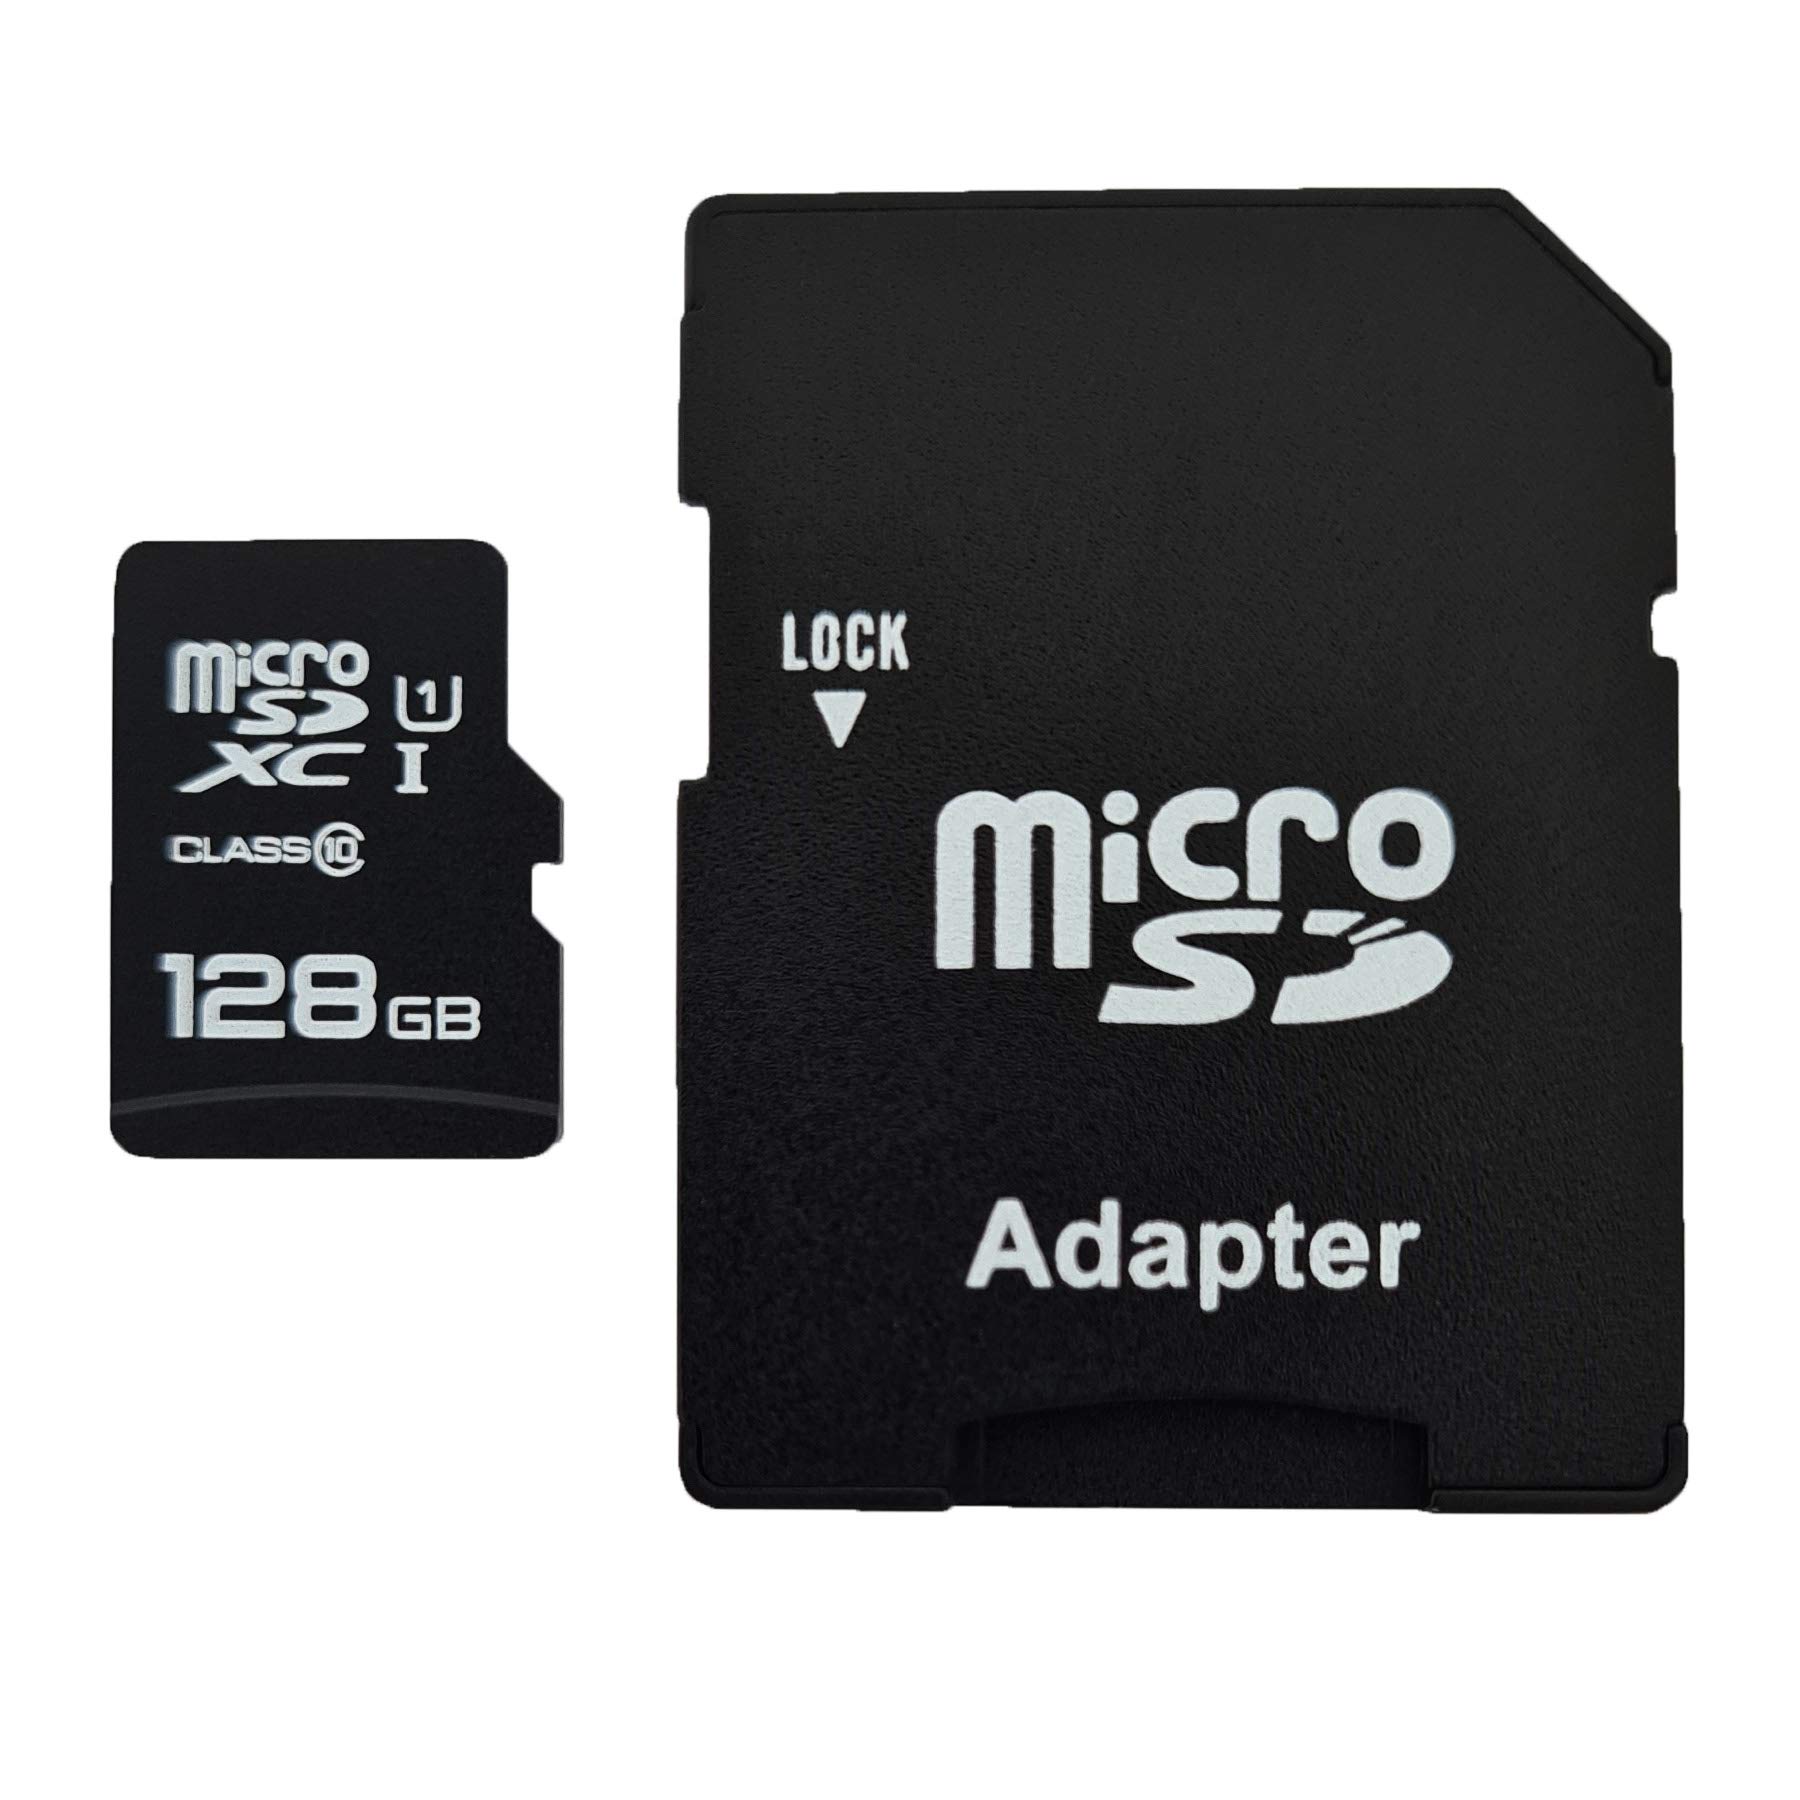 dekoelektropunktde 128GB MicroSDXC Speicherkarte mit Adapter Class 10 kompatibel für Olympus OM-D E-M5